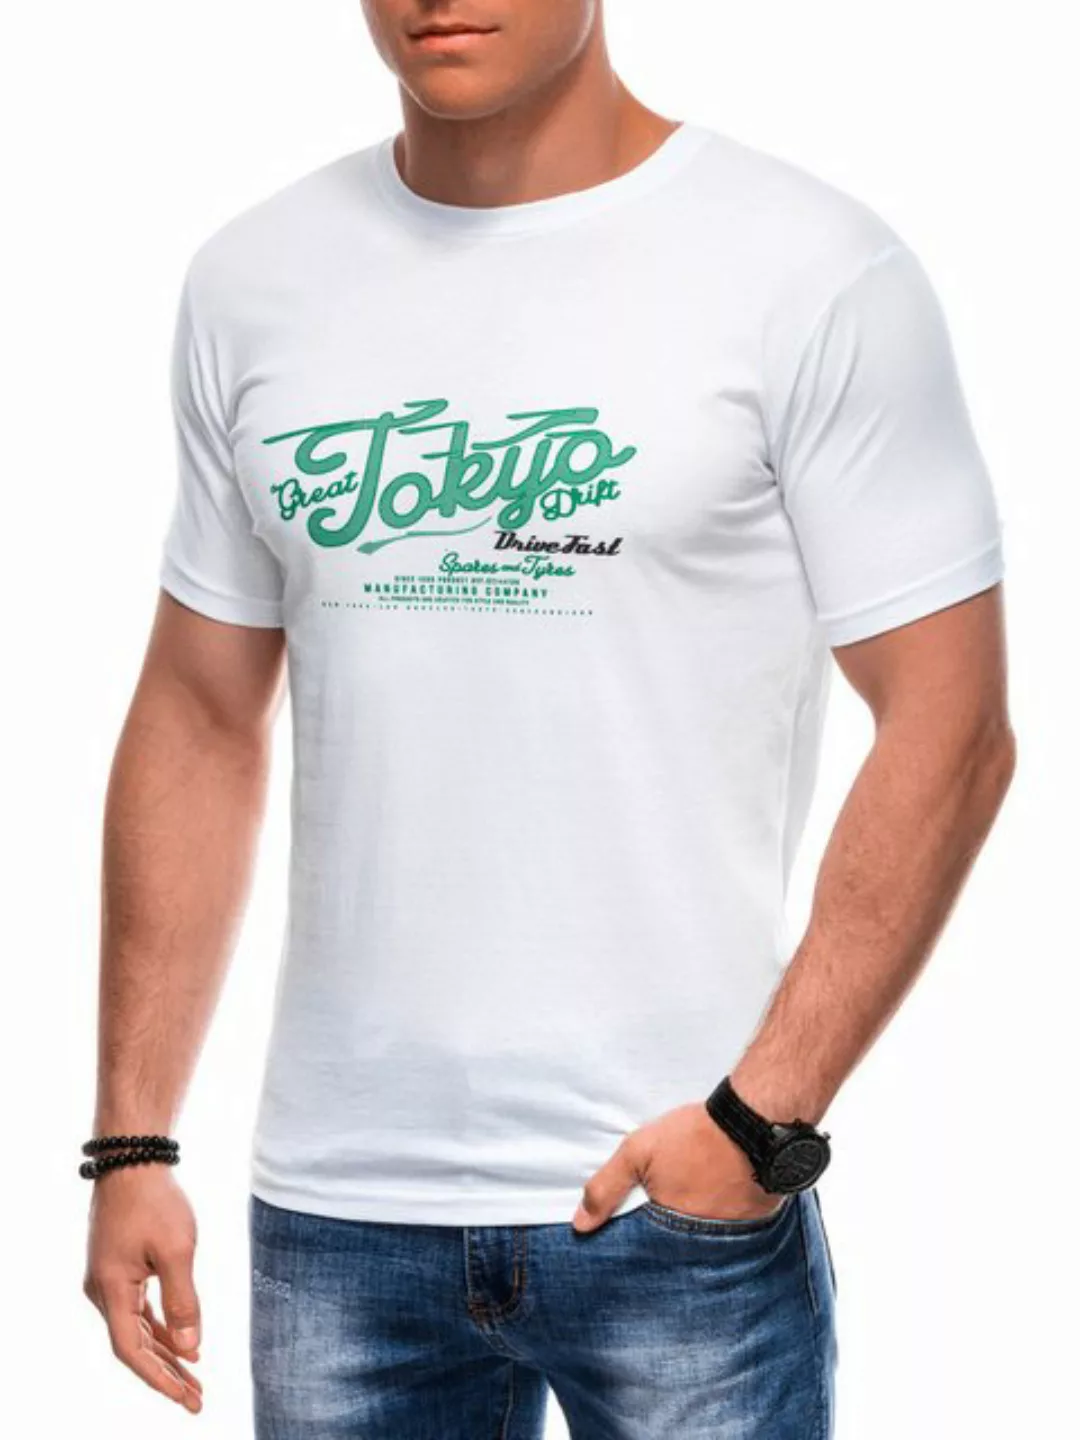 Edoti Print-Shirt Herren-T-Shirt Regular Fit. günstig online kaufen